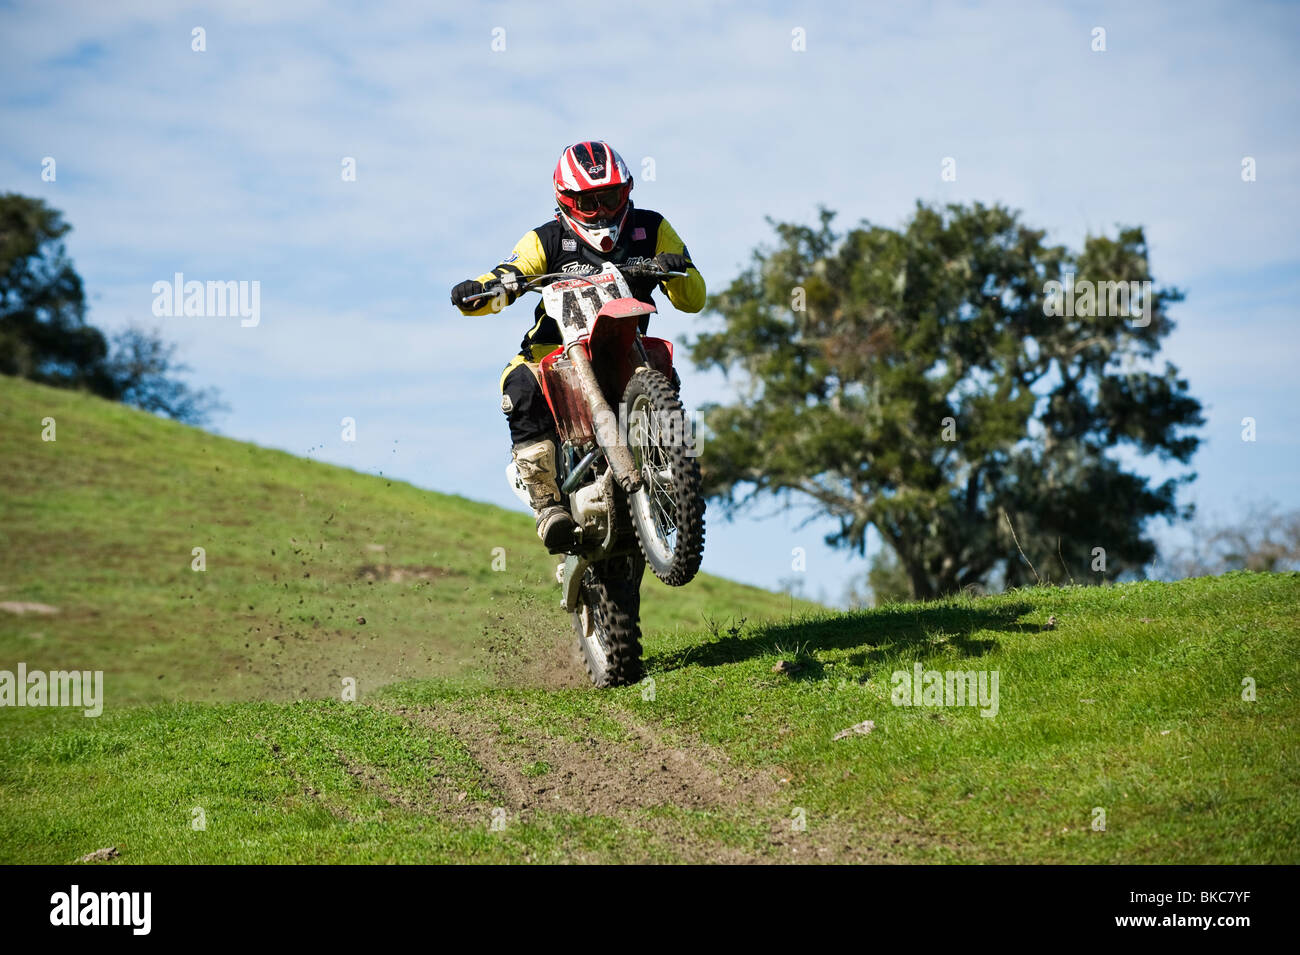 Adult male dirtbike rider wheelies motorycle on dirt trail, California Stock Photo